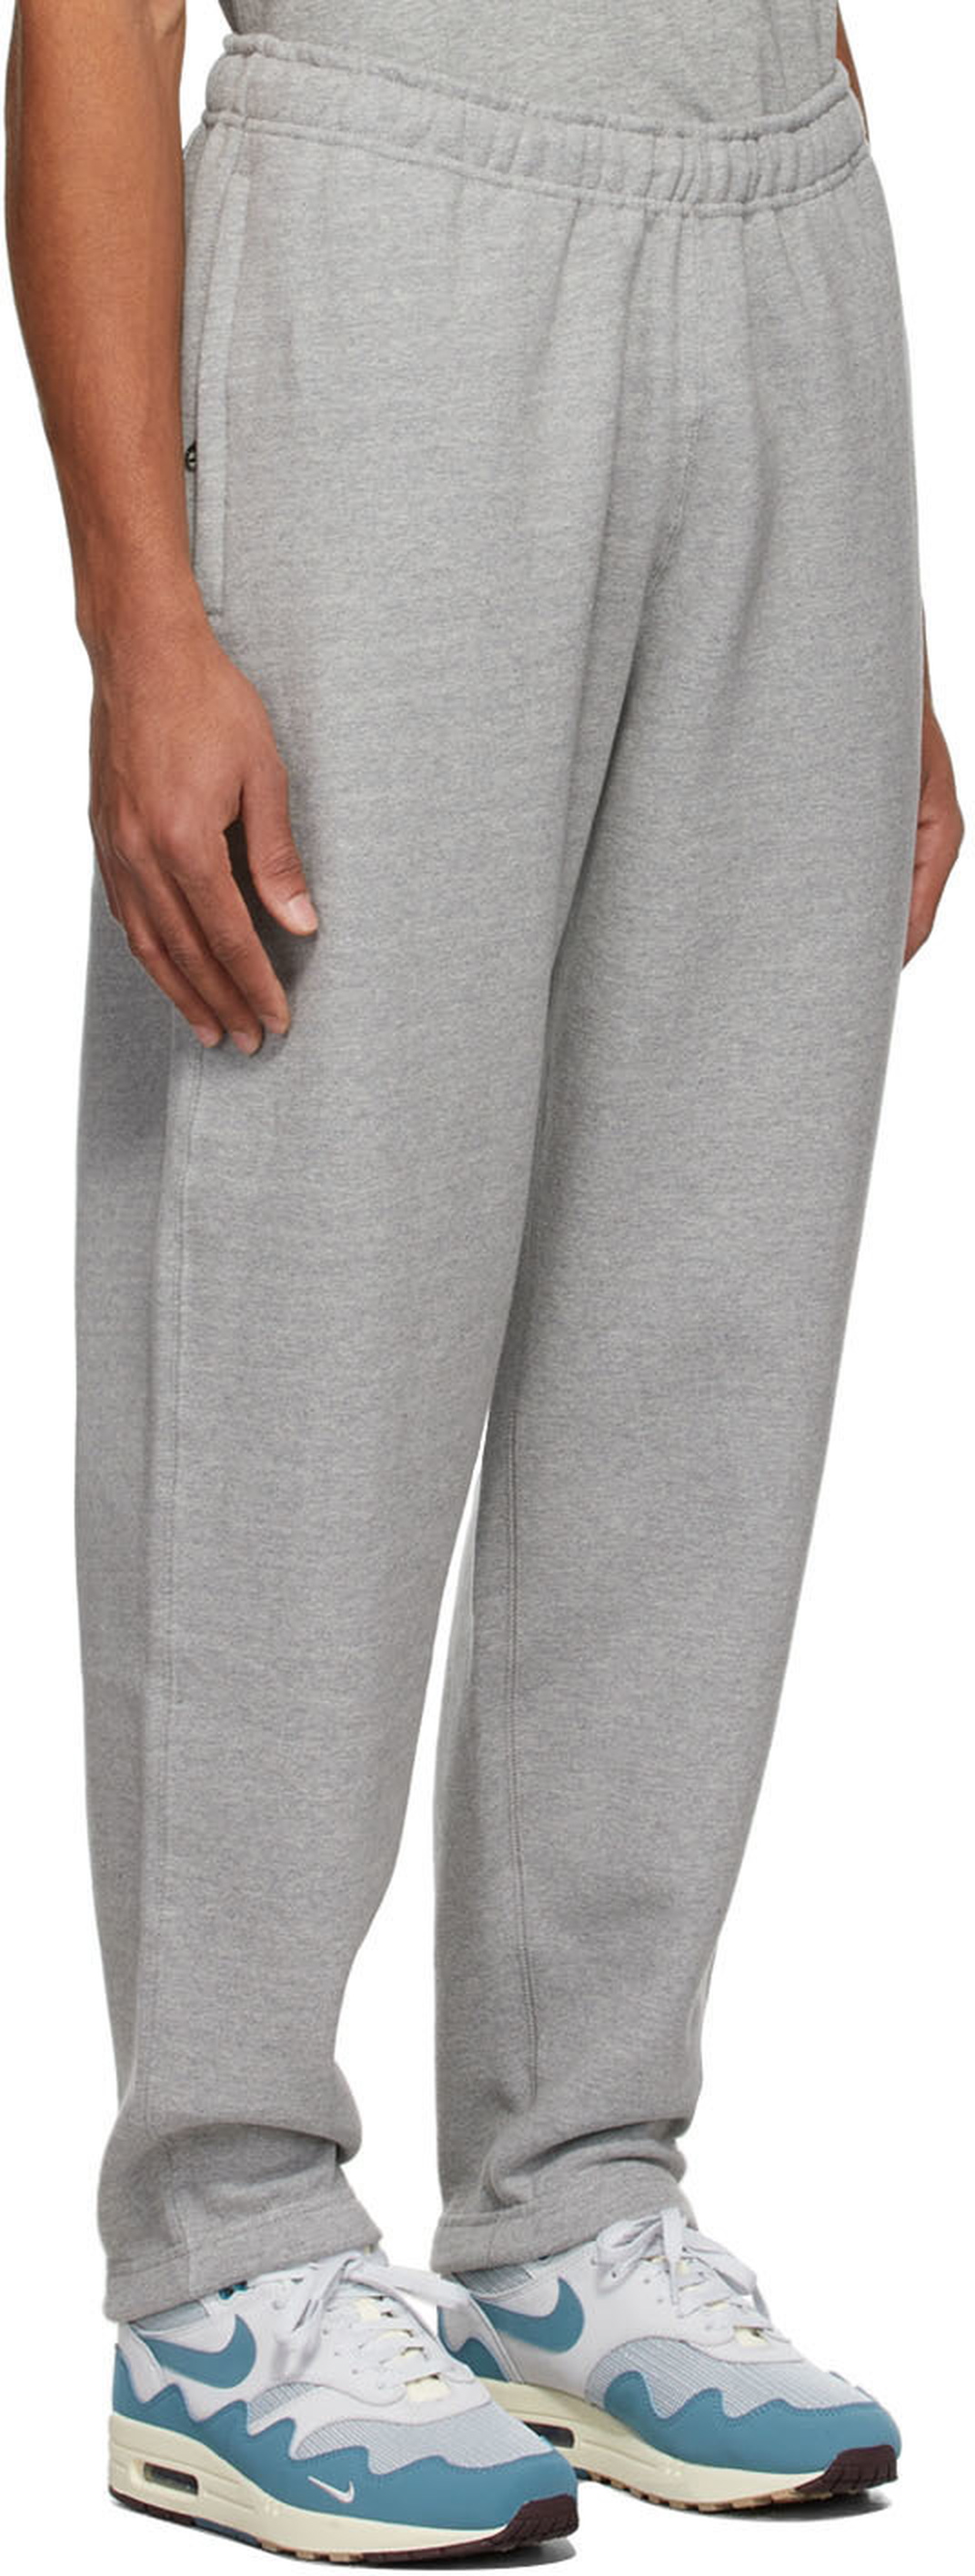 Gray Solo Swoosh Lounge Pants by Nike on Sale